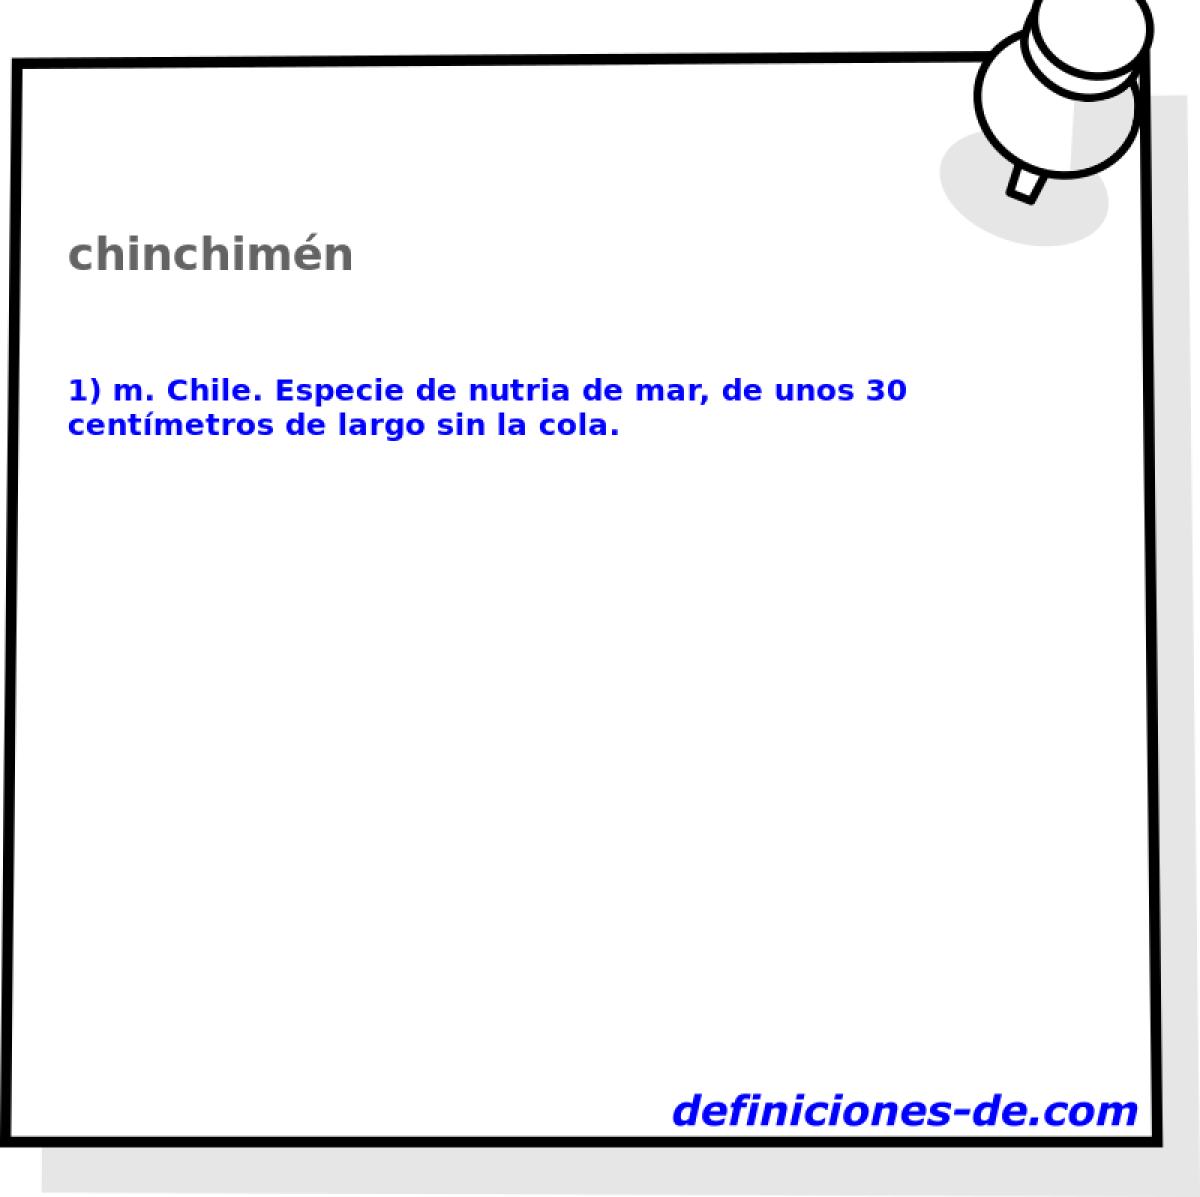 chinchimn 